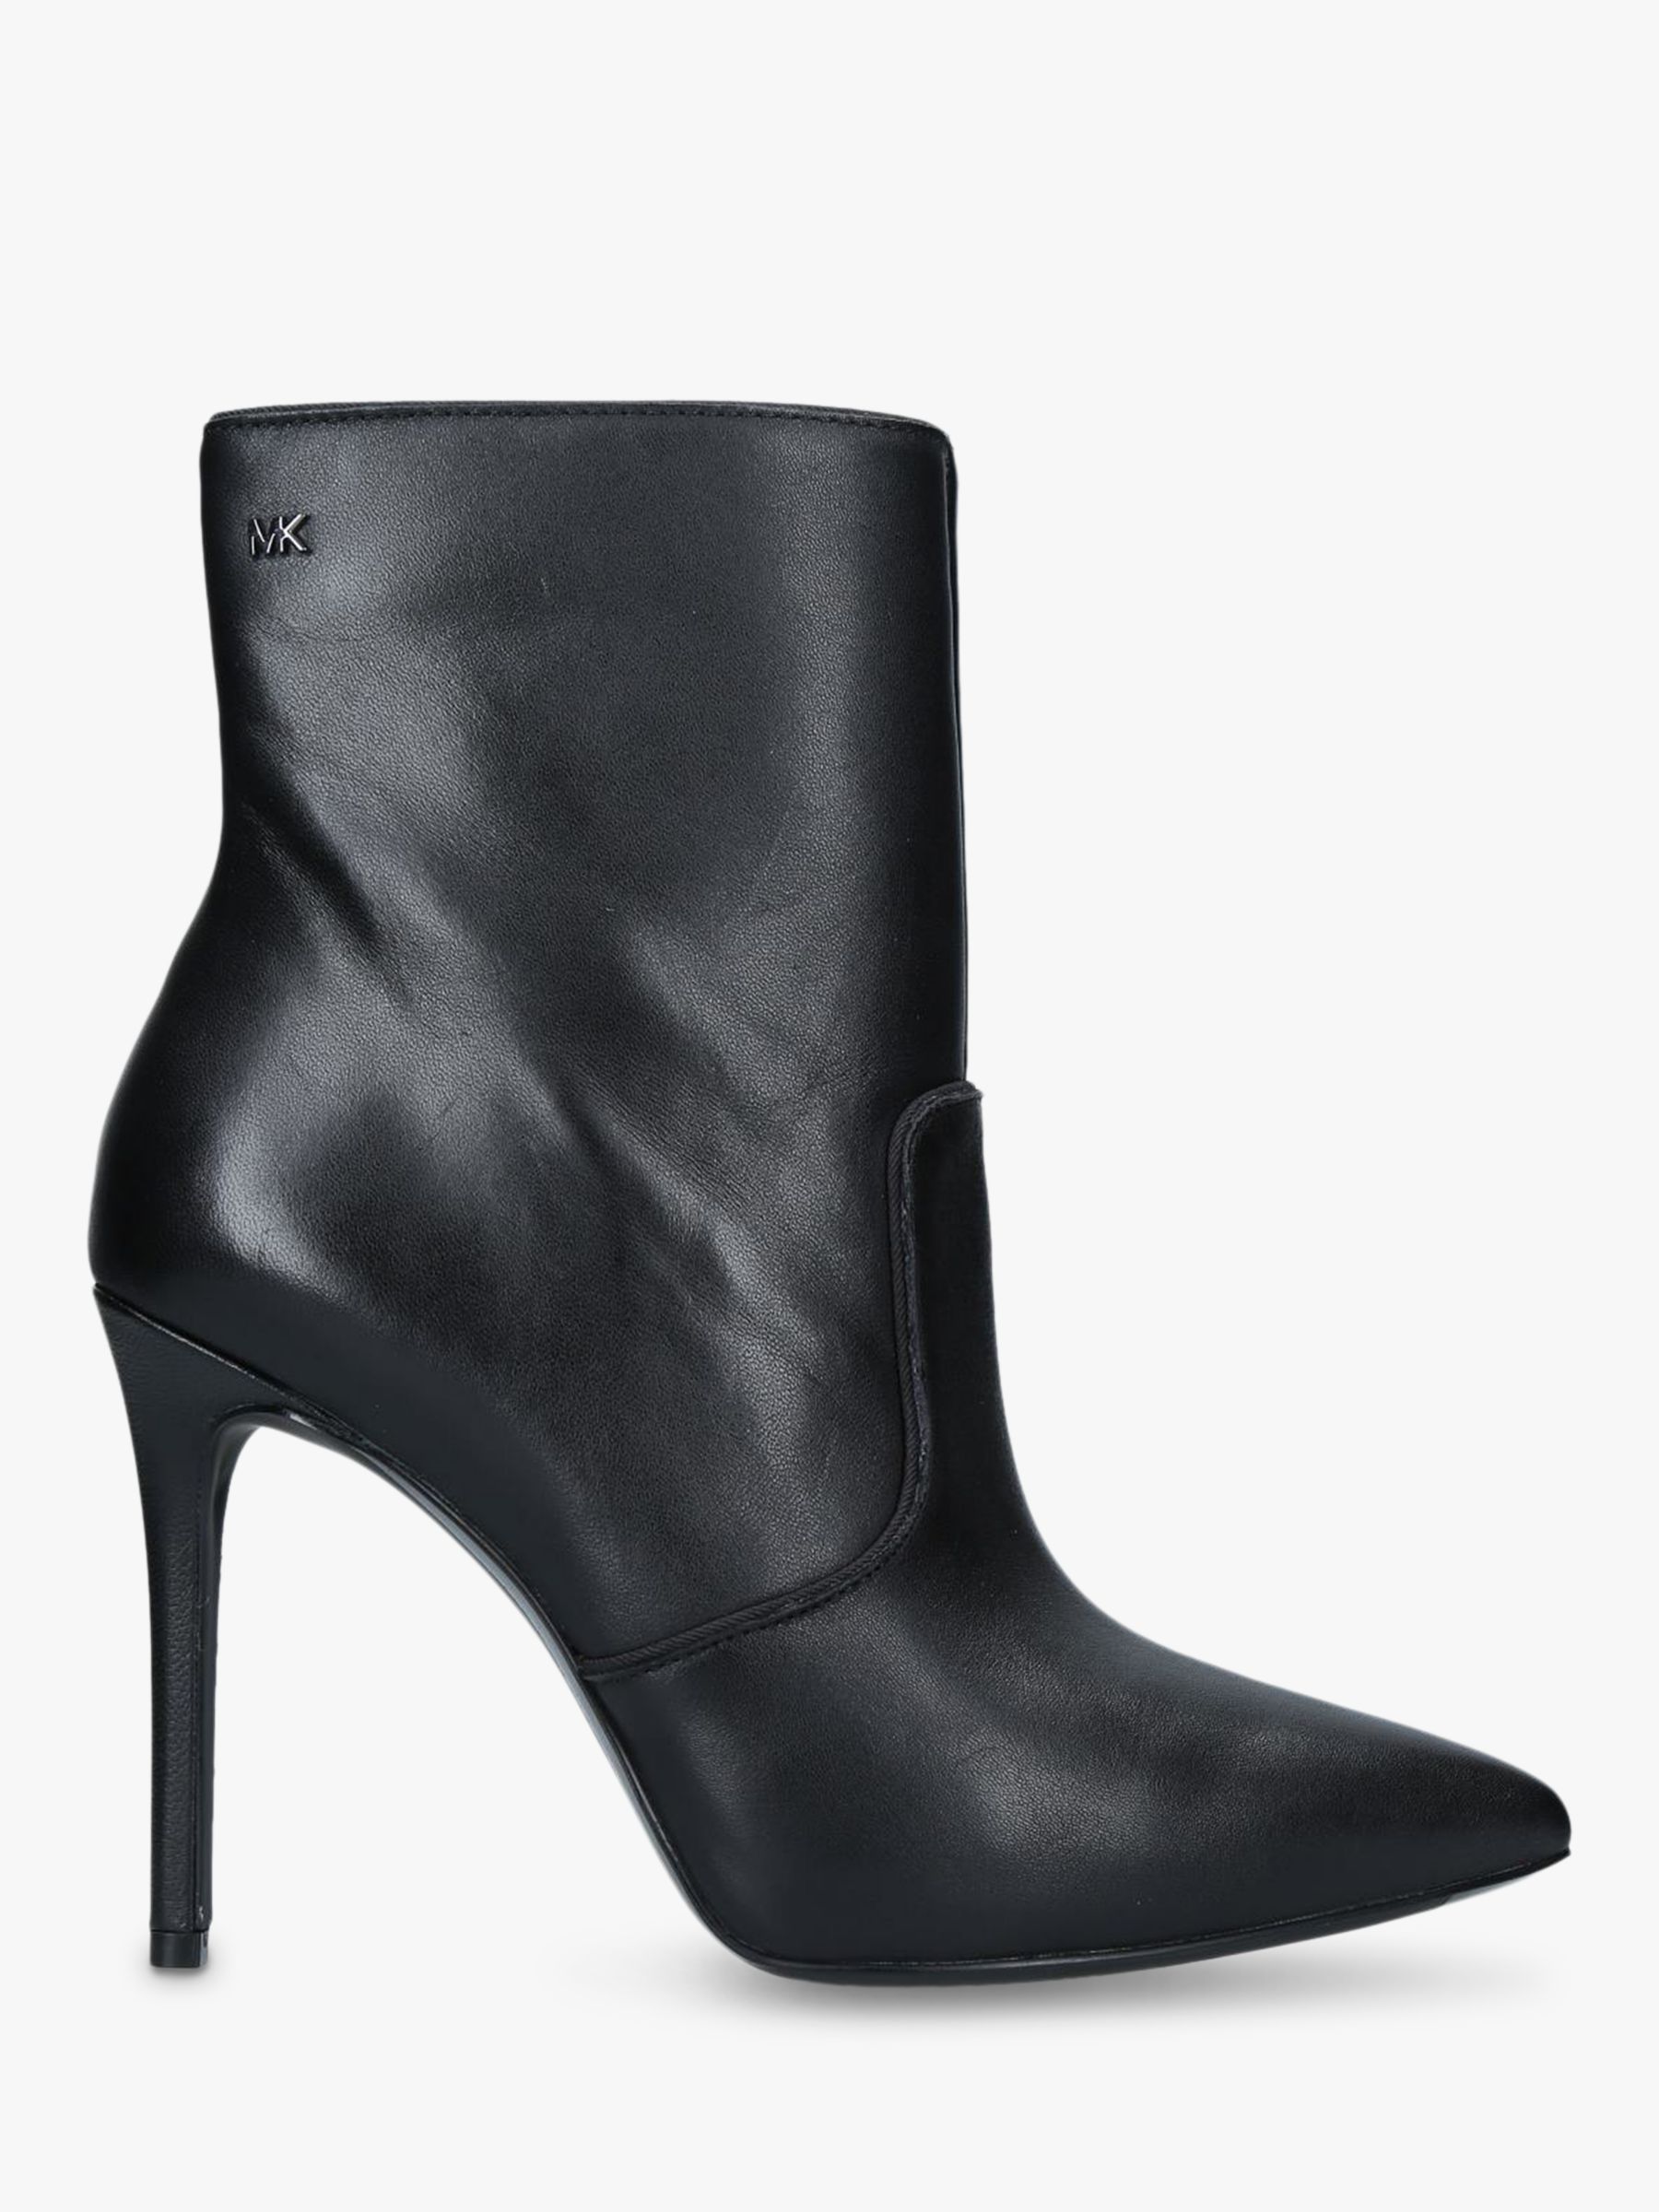 MICHAEL Michael Kors Blaine Stiletto Heel Ankle Boots, Black Leather